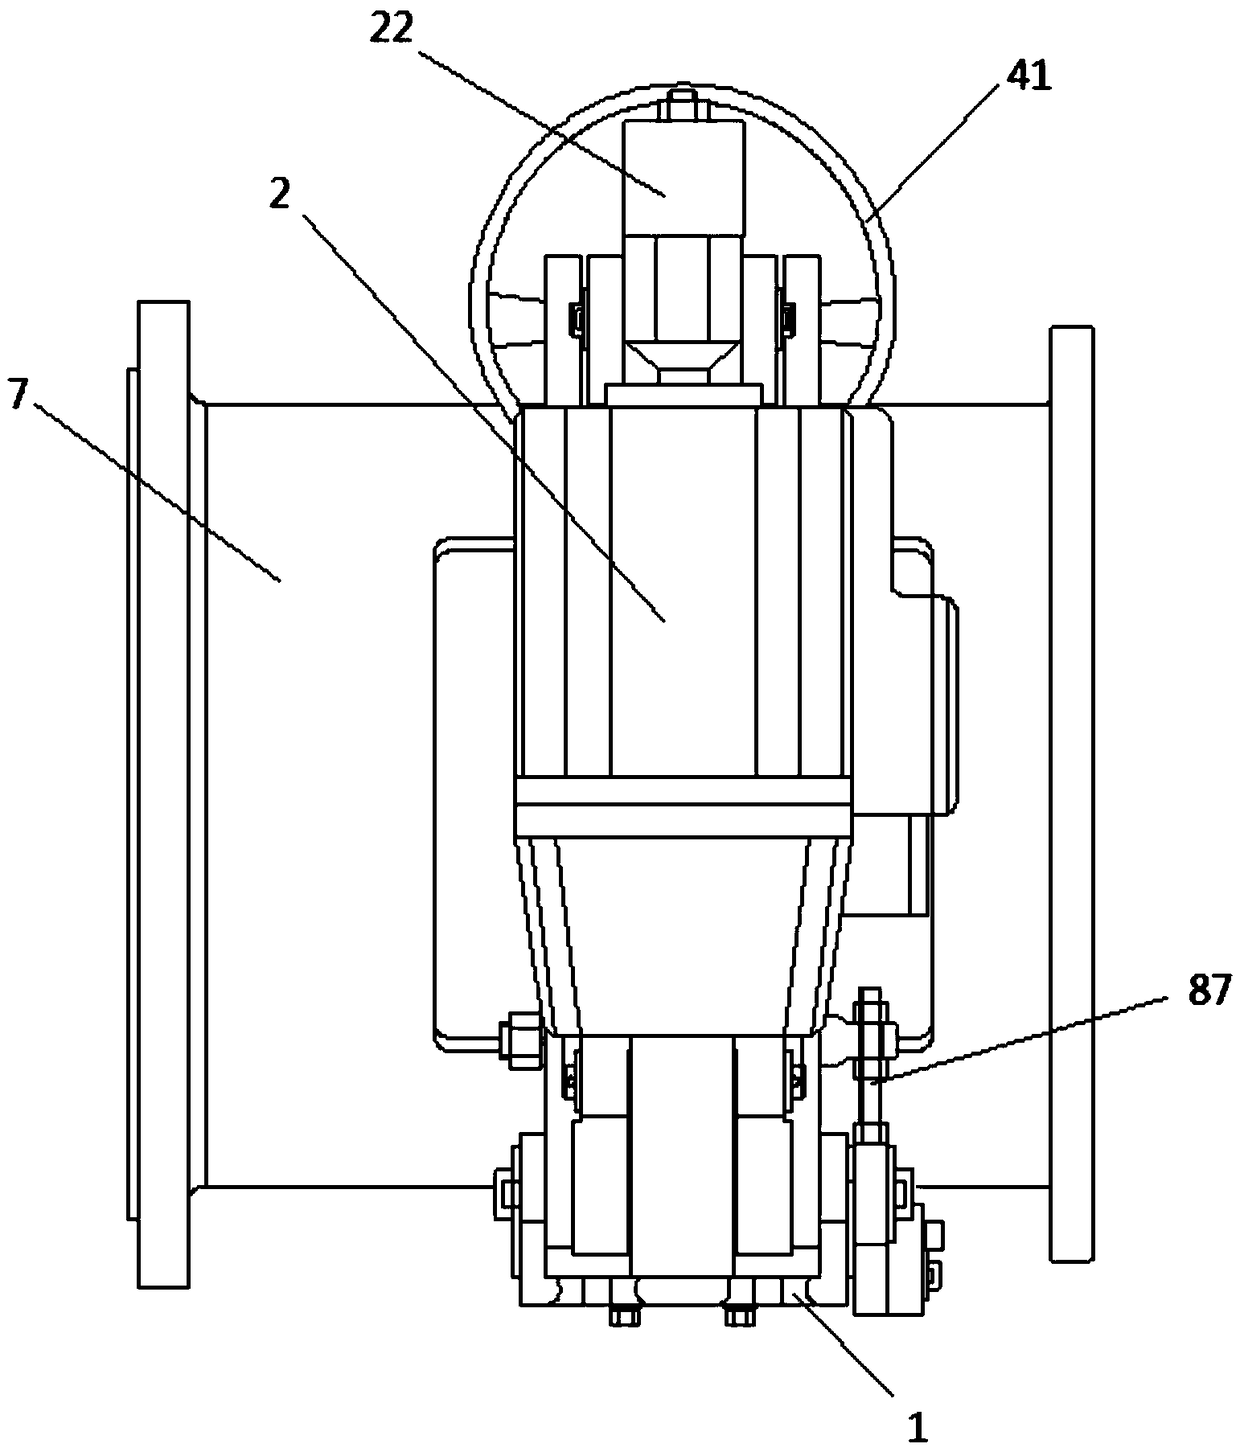 Hydraulic braking system of railway vehicle